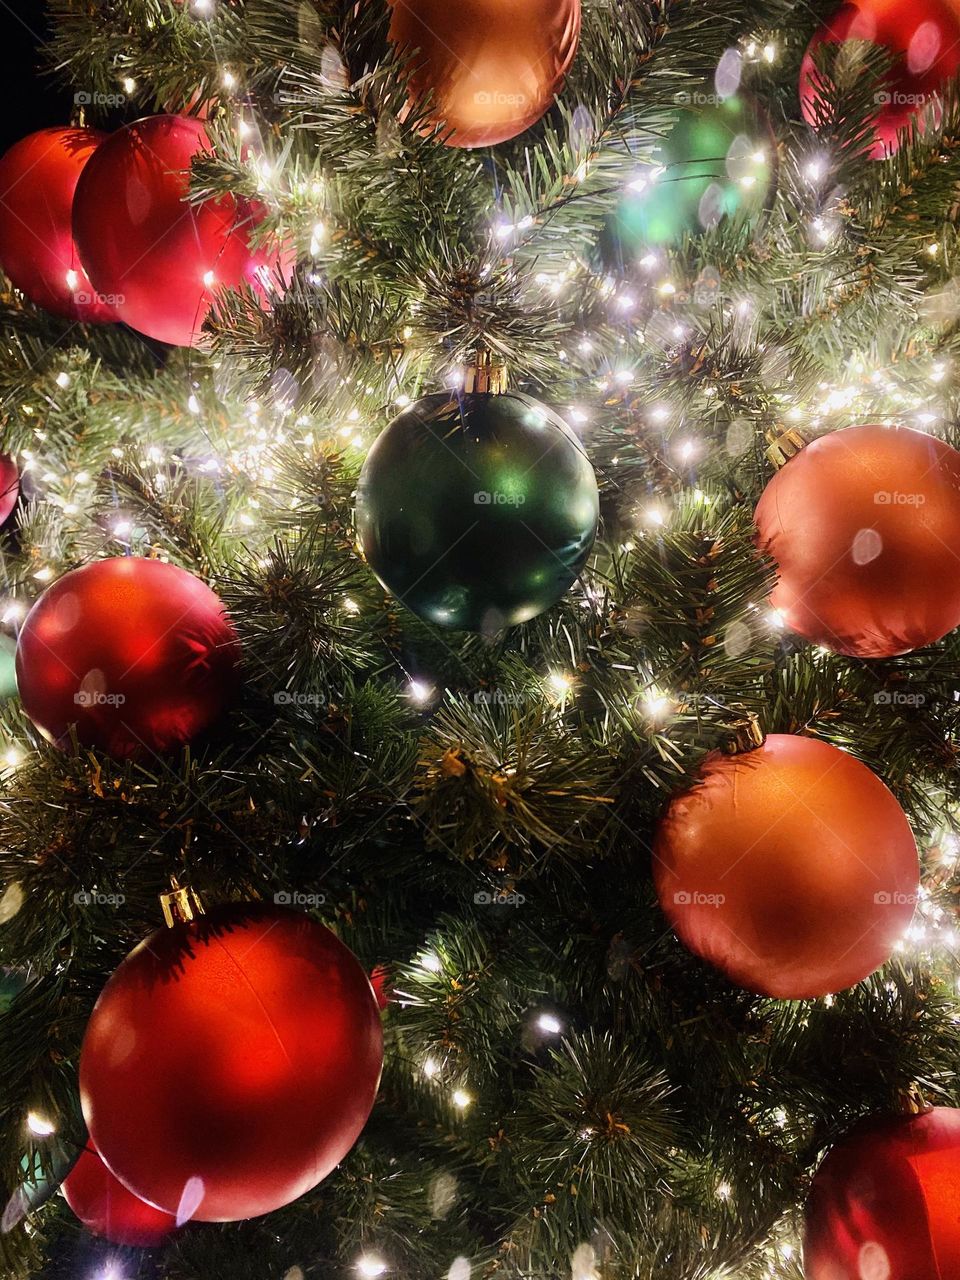 round balls on a festive tree illuminated with lights